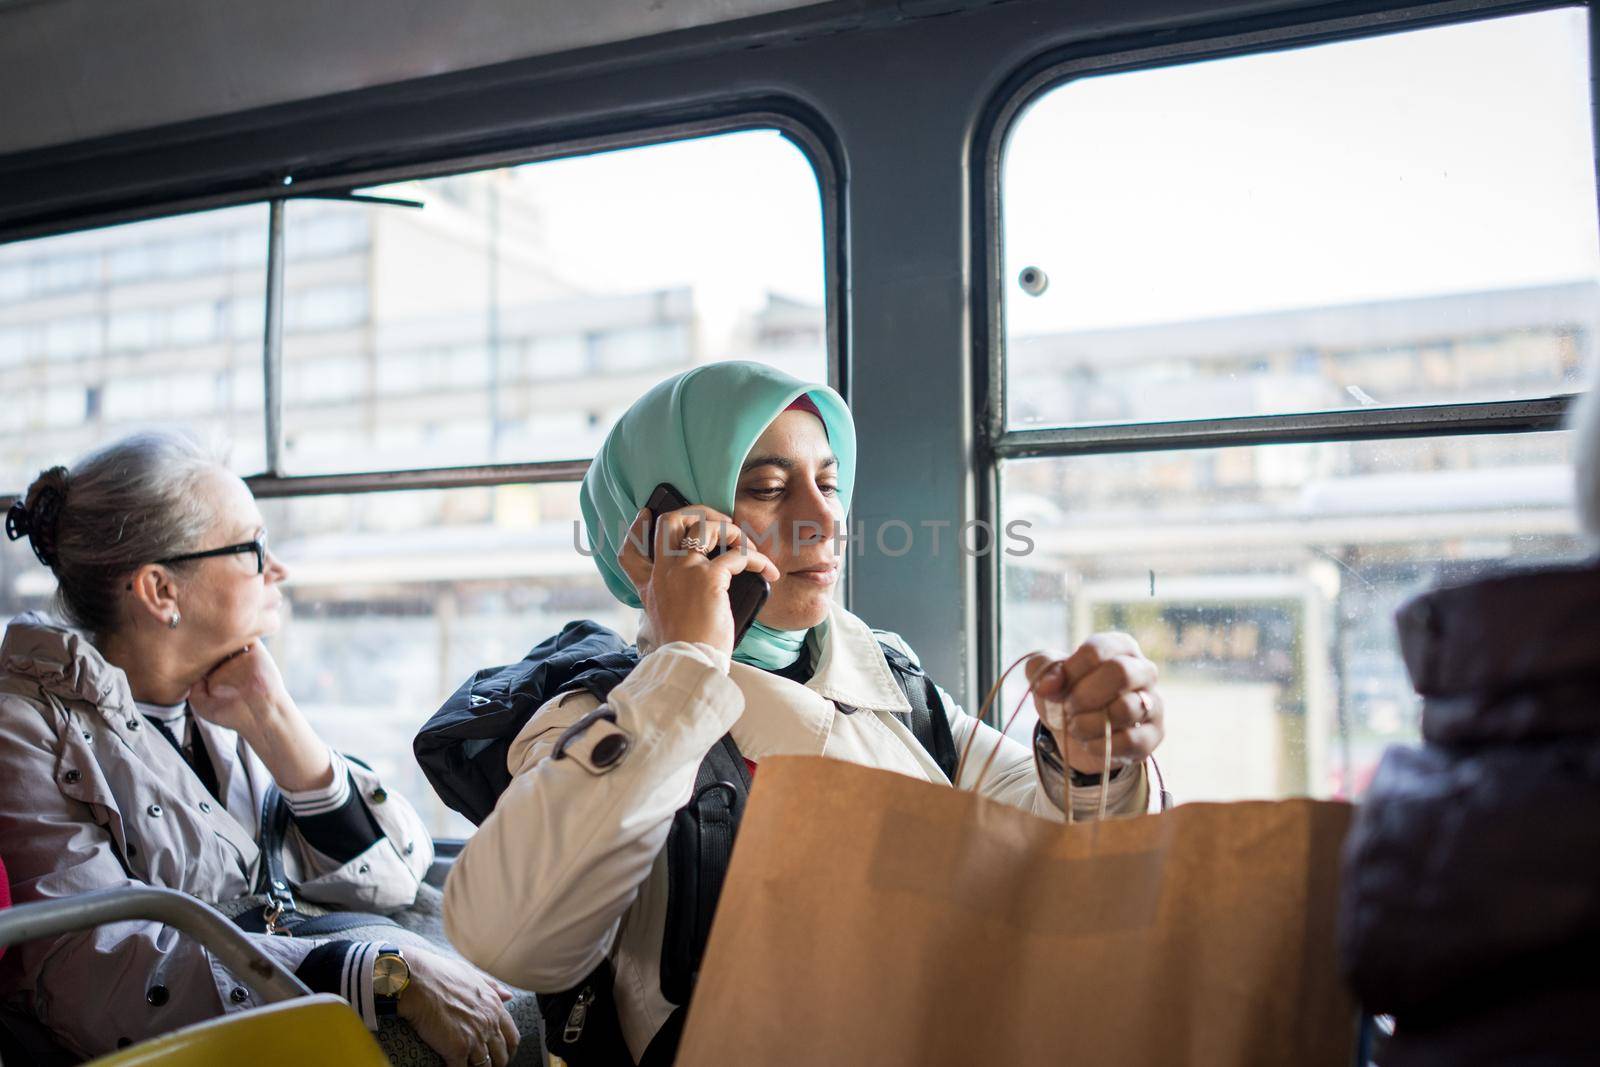 Muslim woman riding public transport in city by Zurijeta